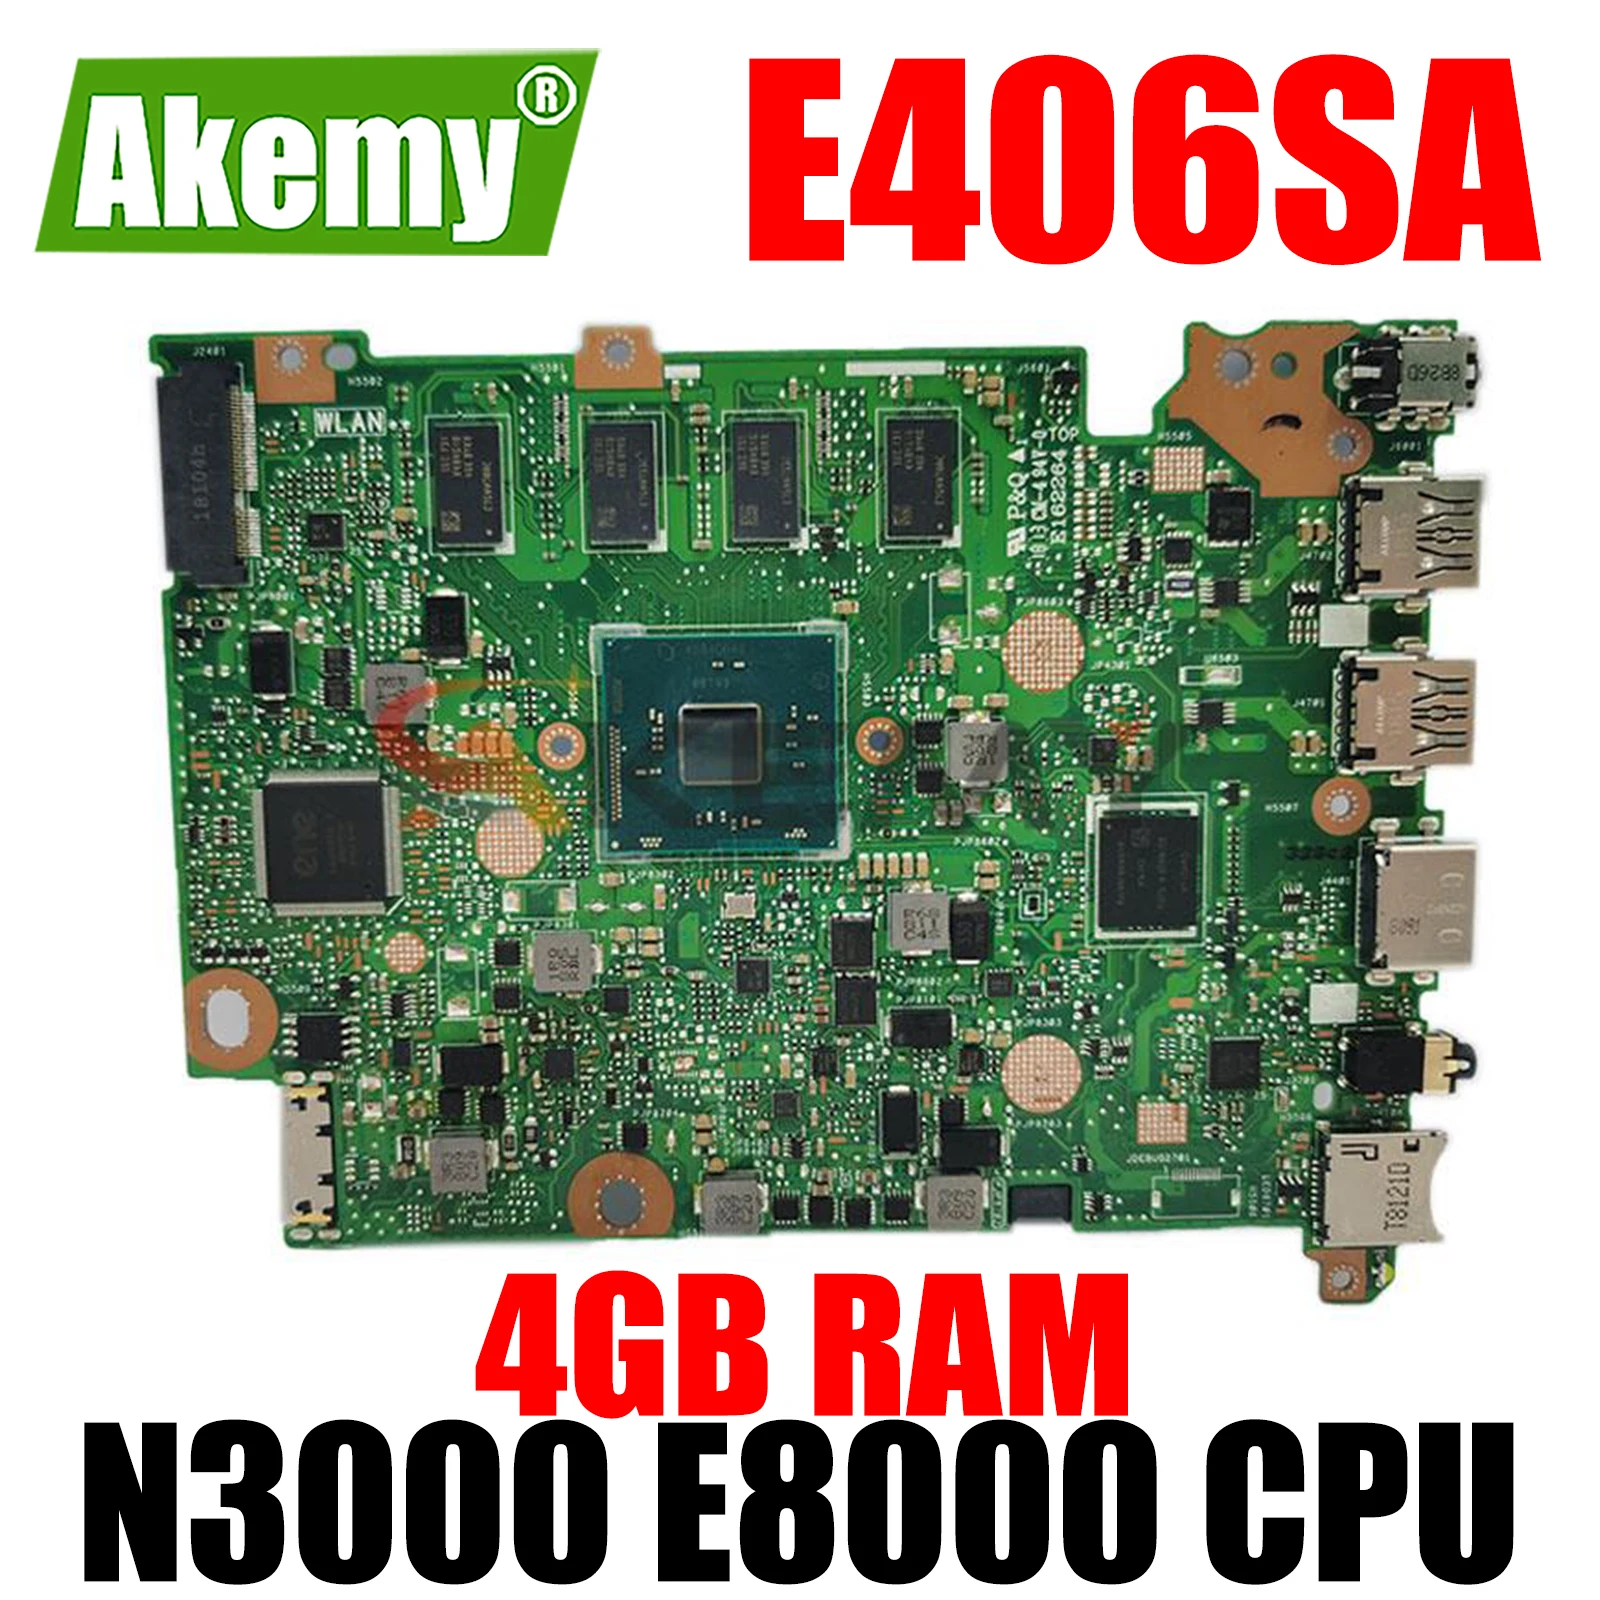 

For ASUS VivoBook E406S E406SA E406SAS Laptop motherboard Mainboard W/ N3000 E8000 CPU 64GB 128G SSD 4GB RAM E406SA Motherboard